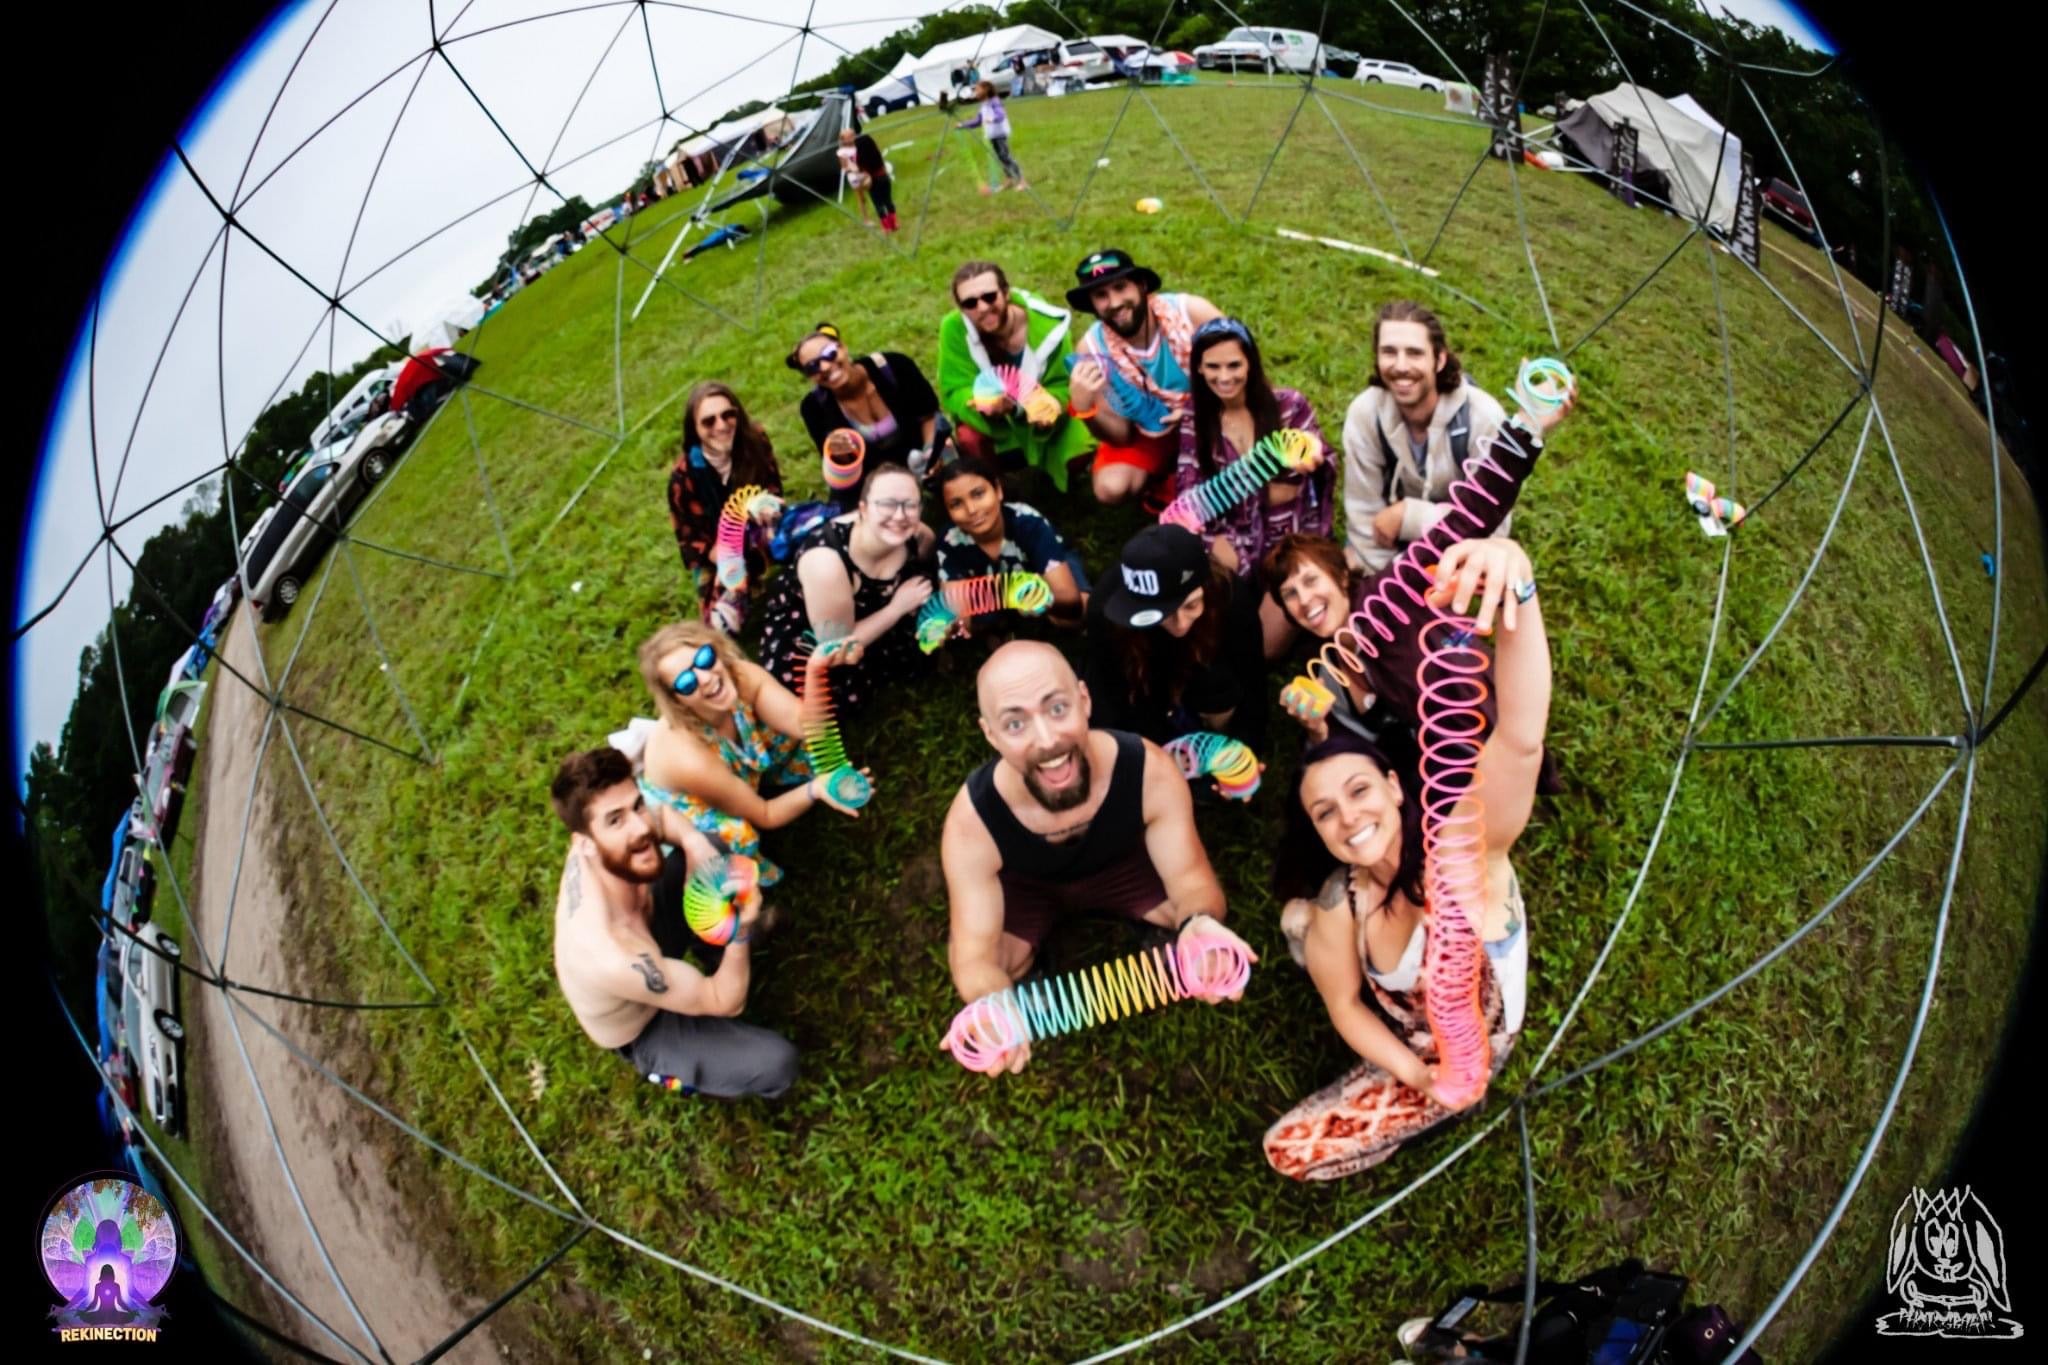 Slinky Josh and students at ReKinection Festival 2022